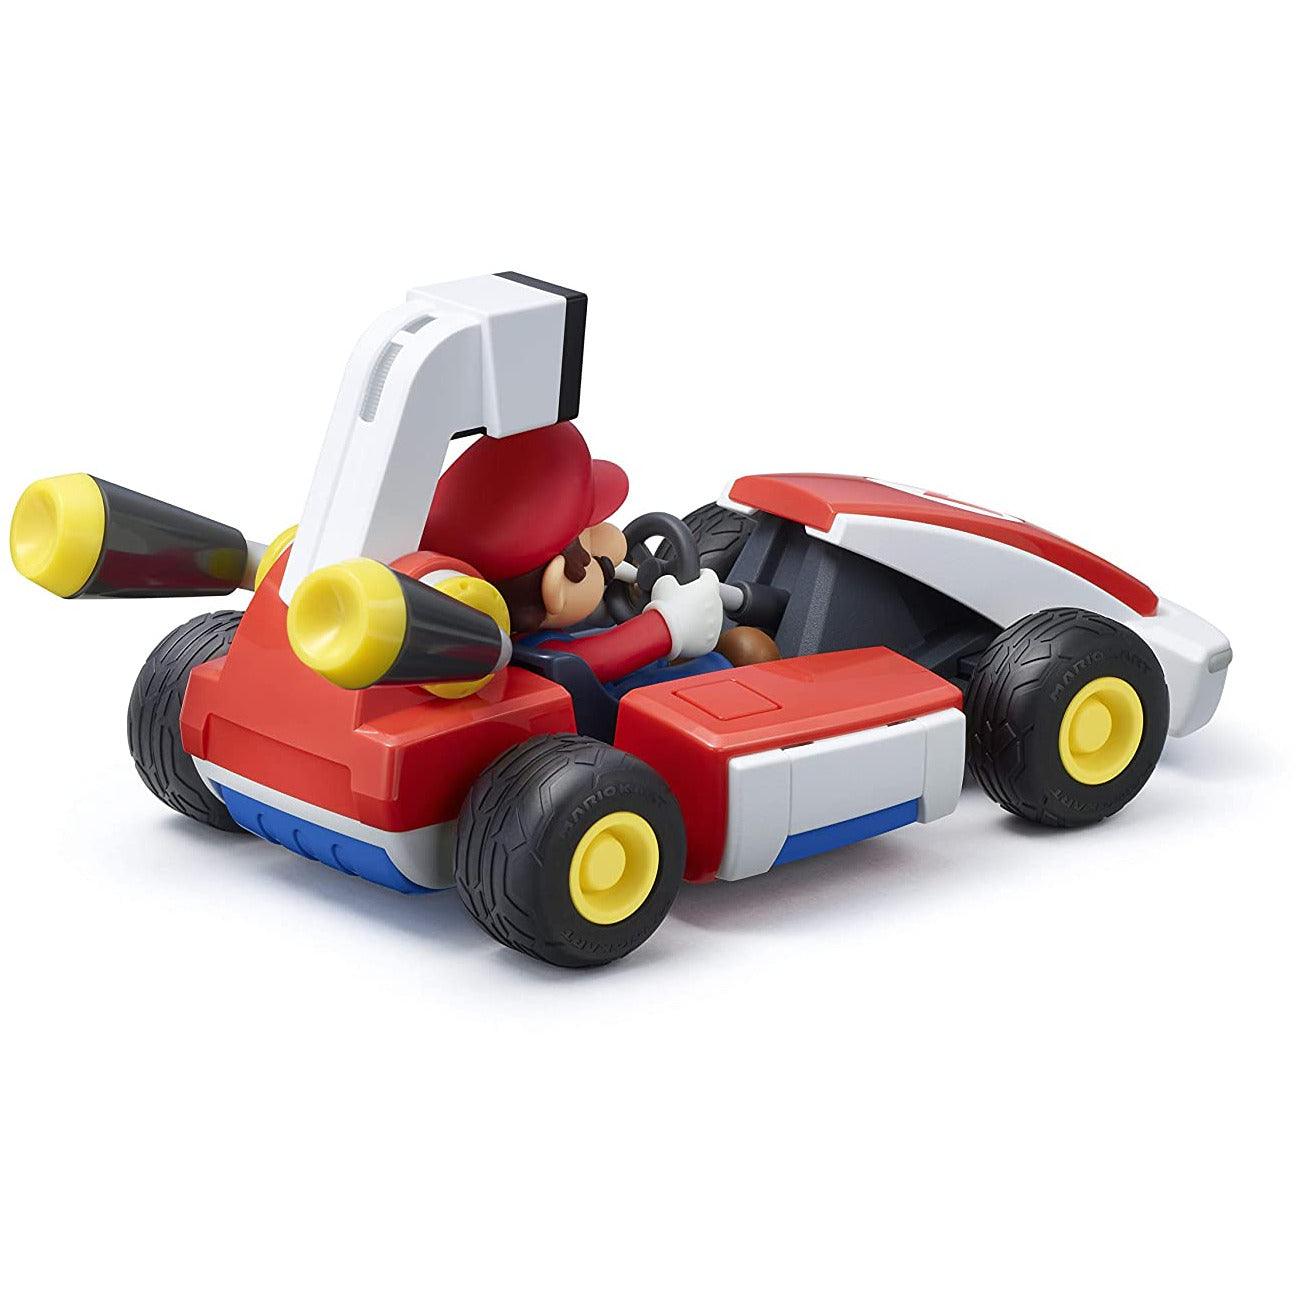 Mario Kart Live Home Circuit -Mario Set - Nintendo Switch - BumbleToys - 4+ Years, 5-7 Years, 8-13 Years, Boys, Pre-Order, Super Mario